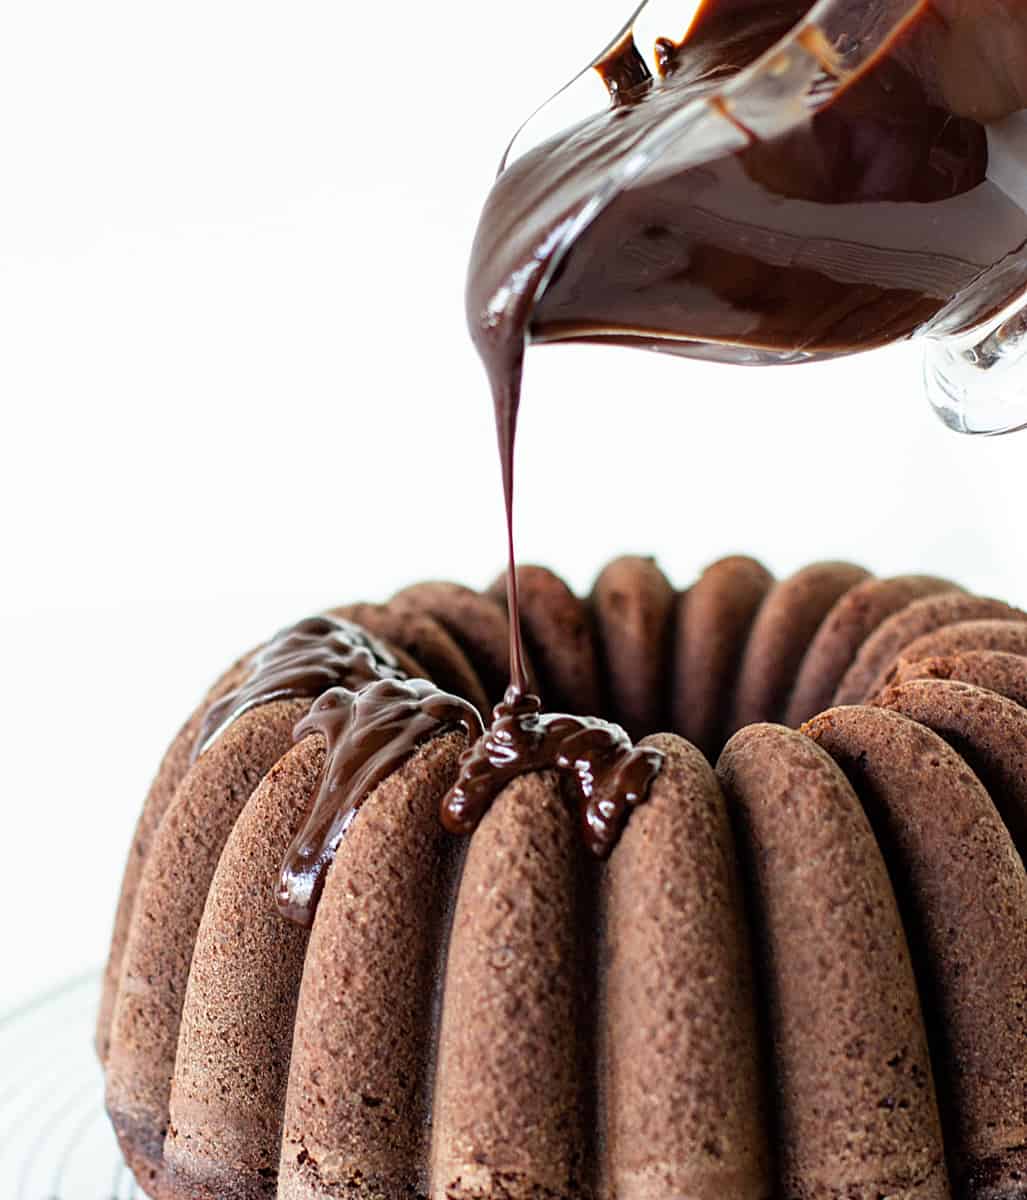 Ganache being poured over chocolate bundt cake